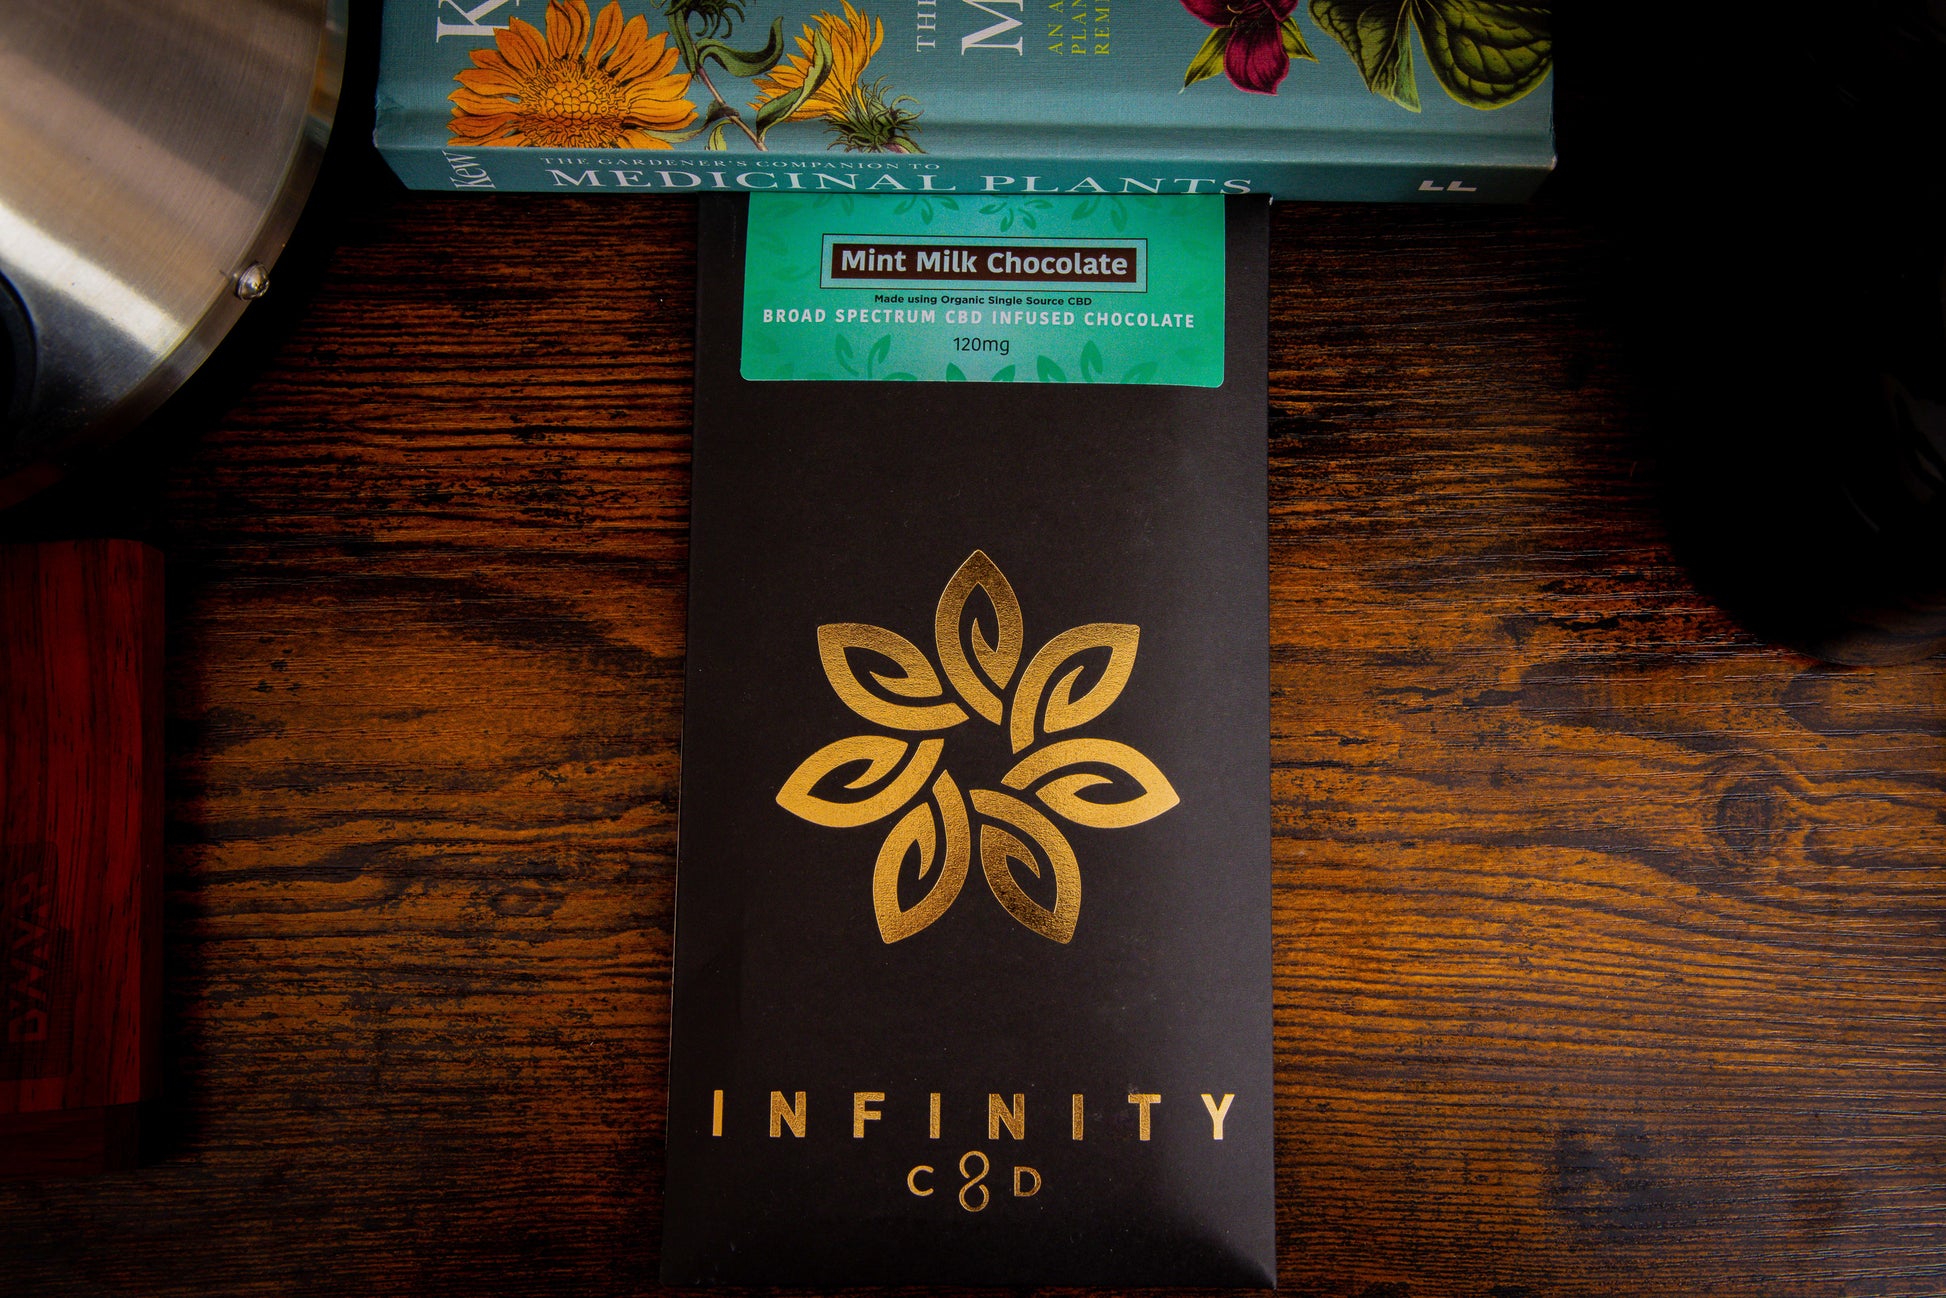 Mint CBD Chocolate by Infinity CBD